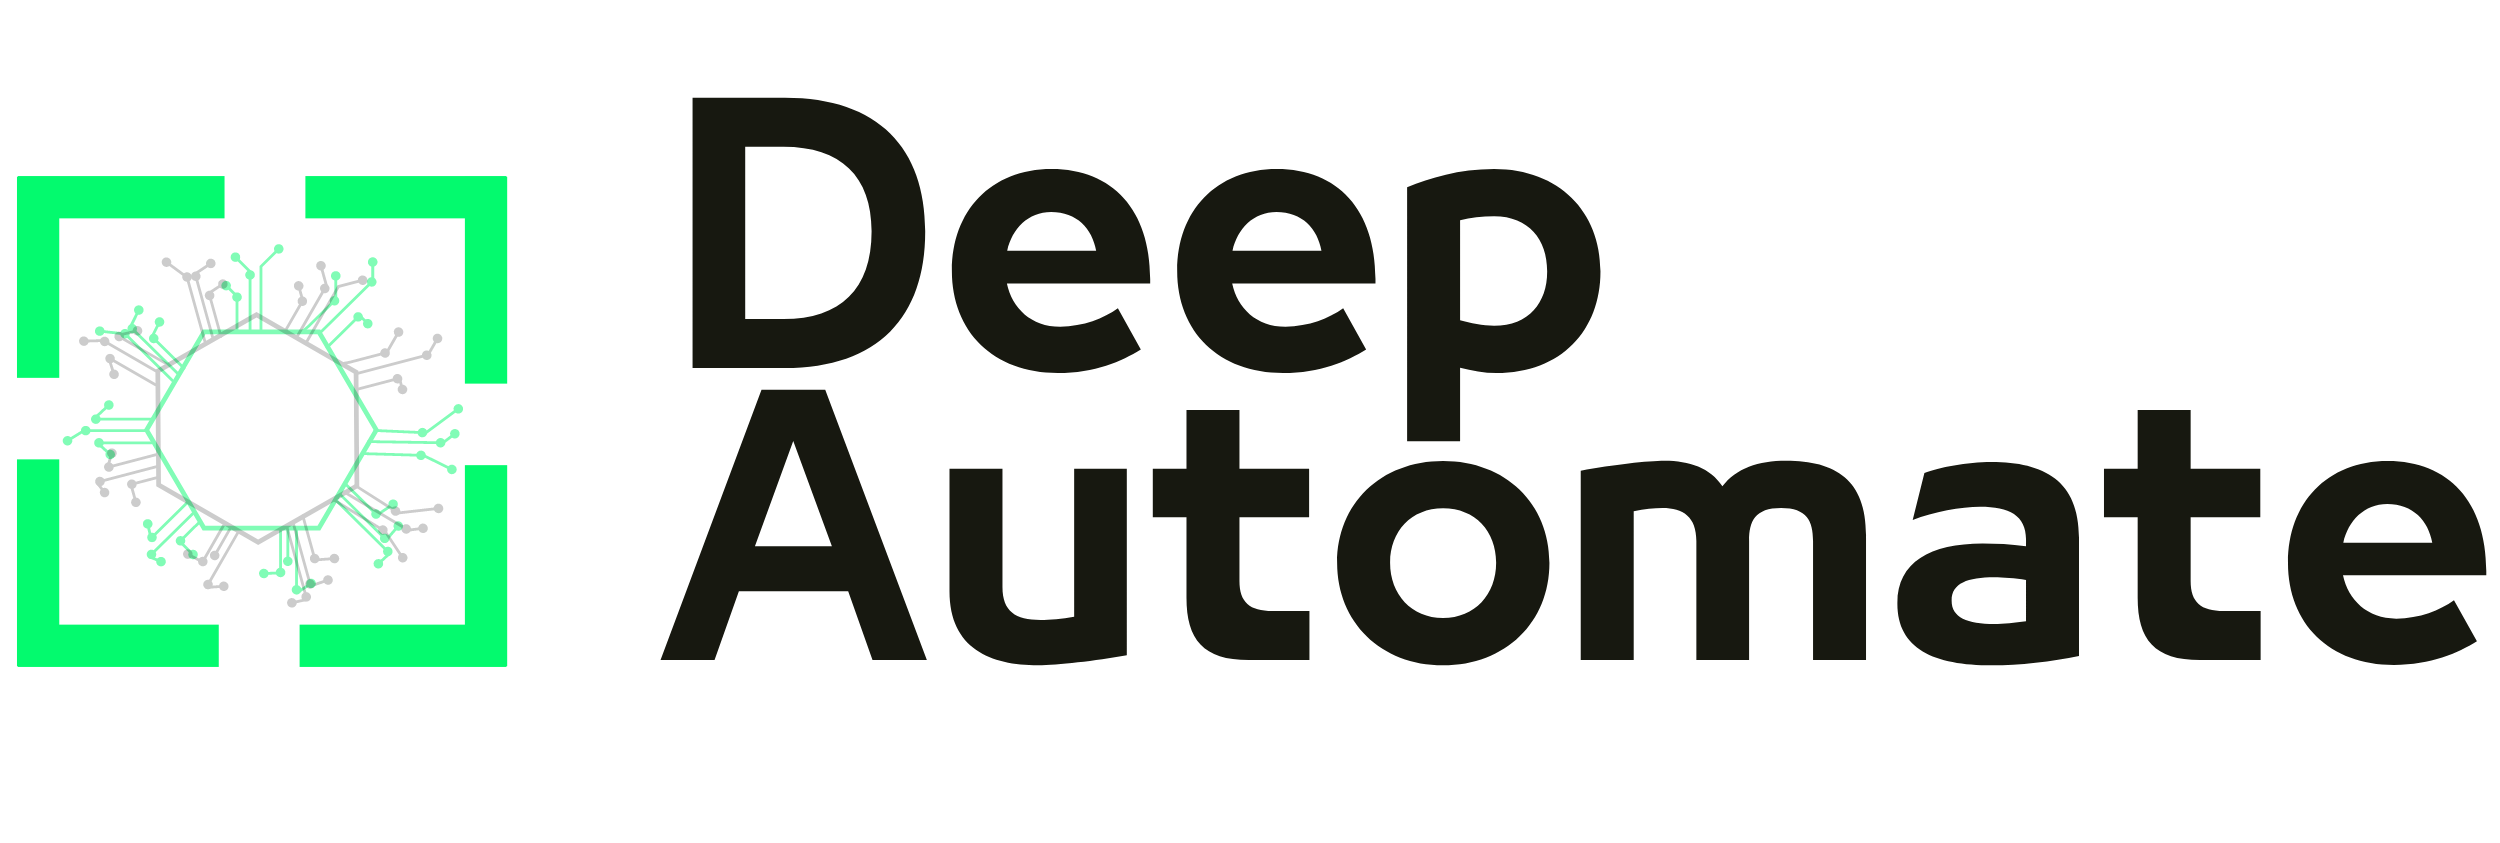 Deep Automate